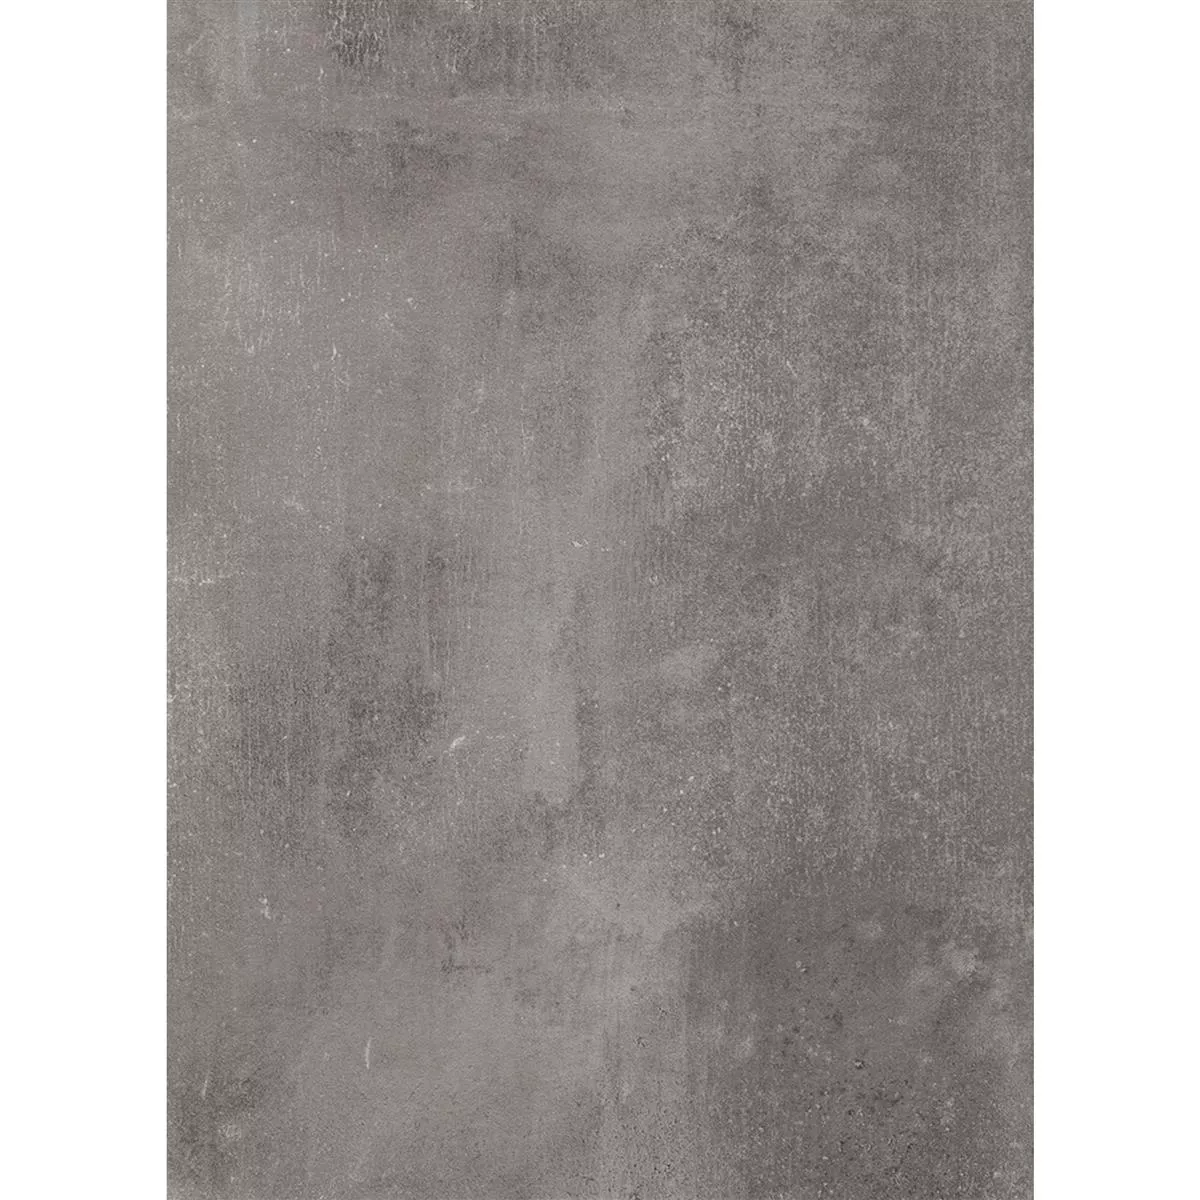 Ladrilho Castlebrook Olhar de Pedra Cinza 60x120cm